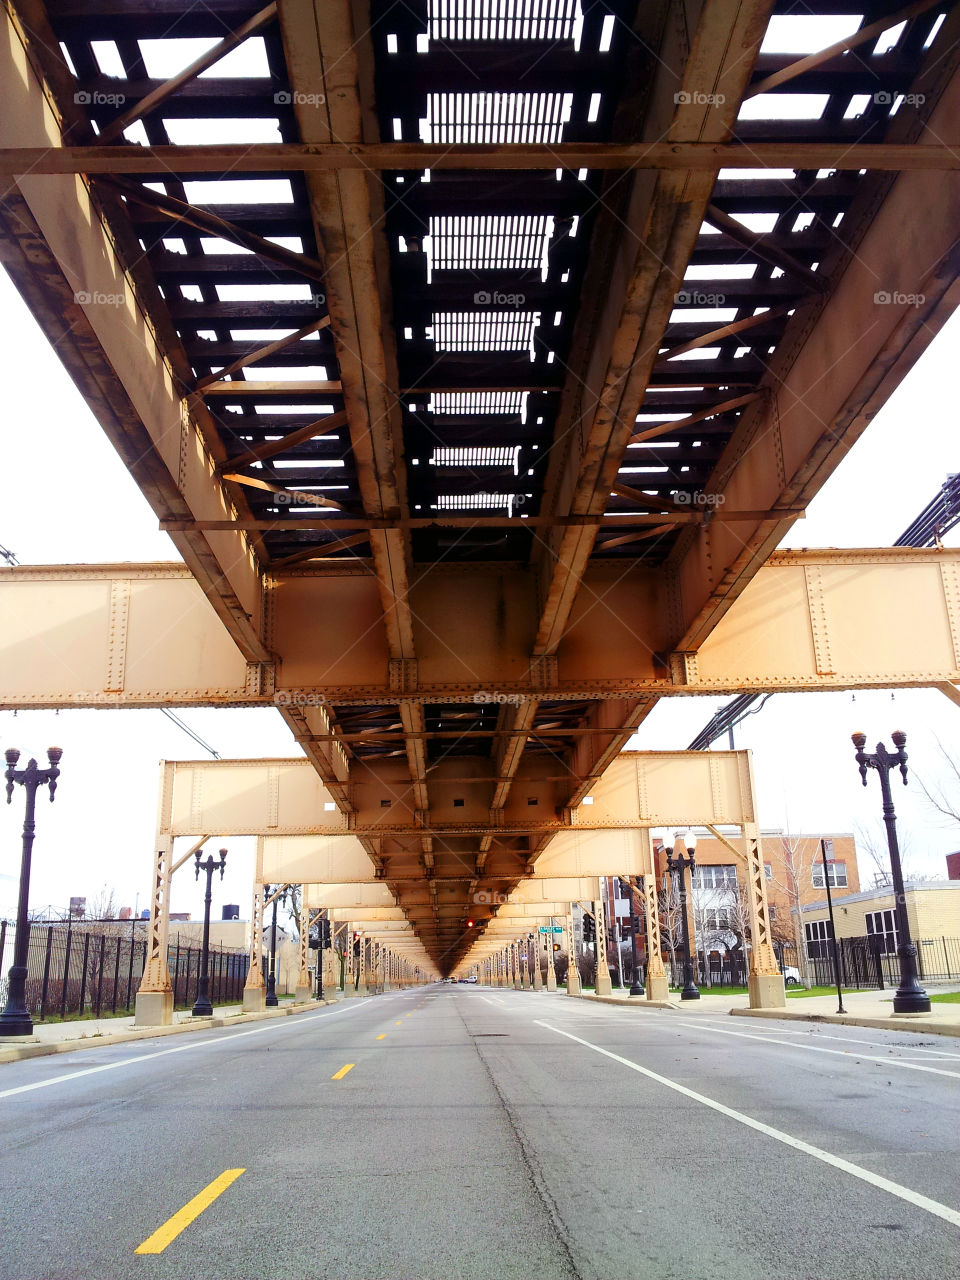 El track train in Chicago